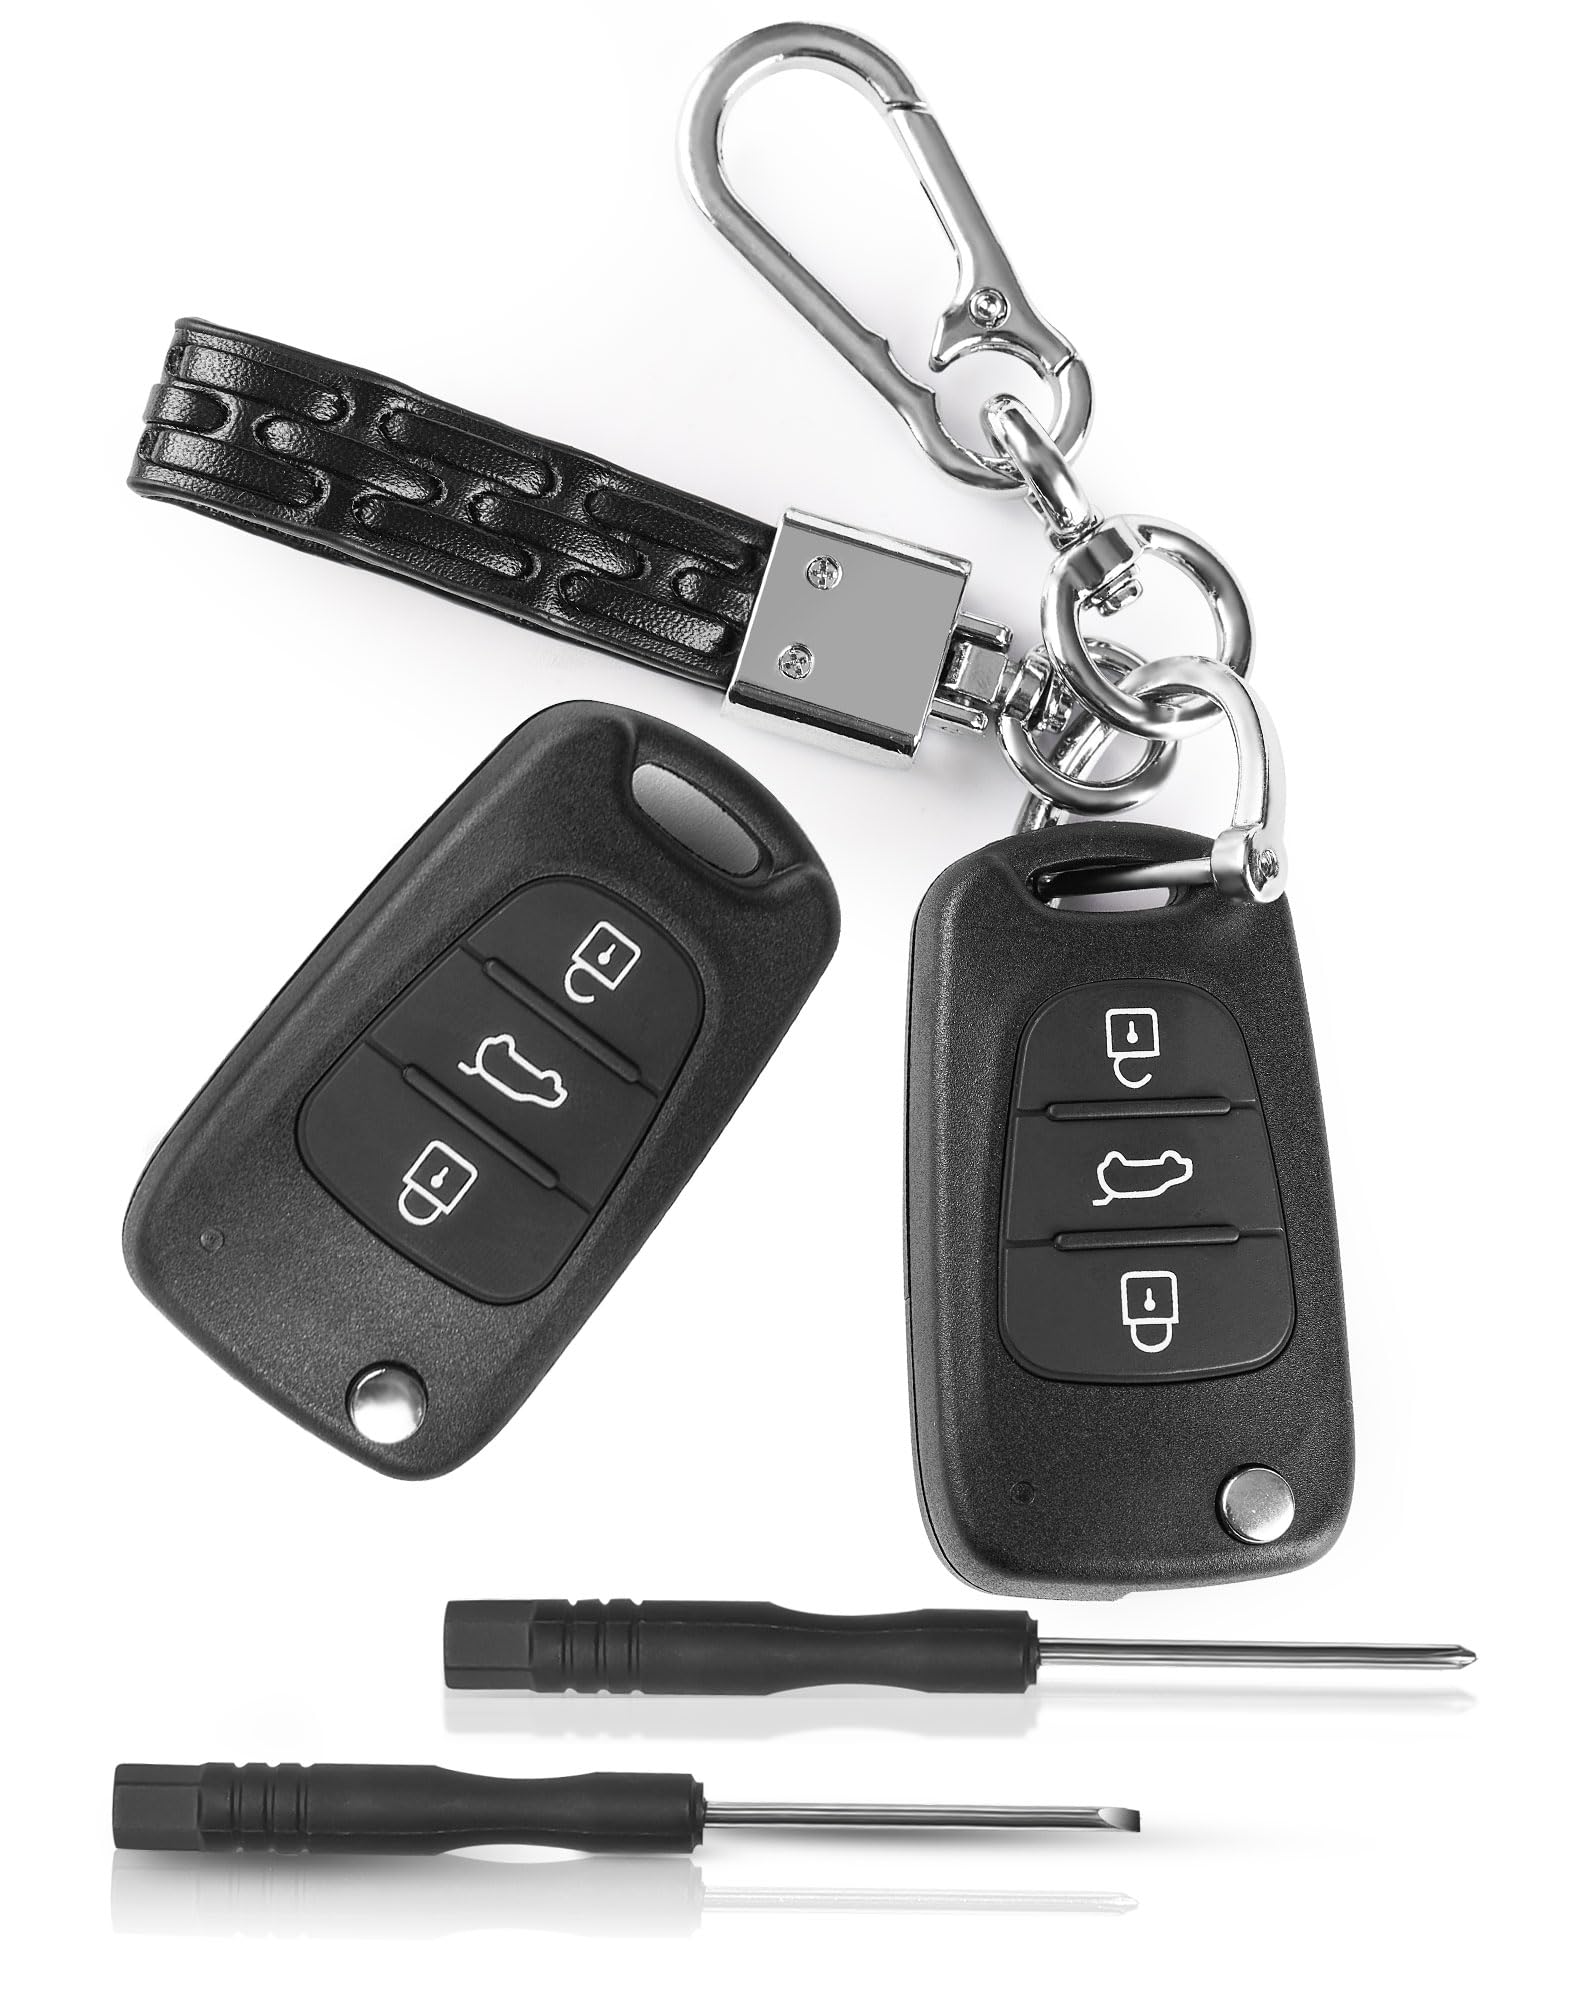 NETONDA 2 Stück Schlüsselhülle 3-Tasten Autoschlüssel Auto Schlüsselgehäuse Hülle für Hyundai i10 i20 i30 ix20 ix35 und Kia Ceed Soul Sportage Venga, Fernbedienung Gehäuse Autoschlüssel von NETONDA